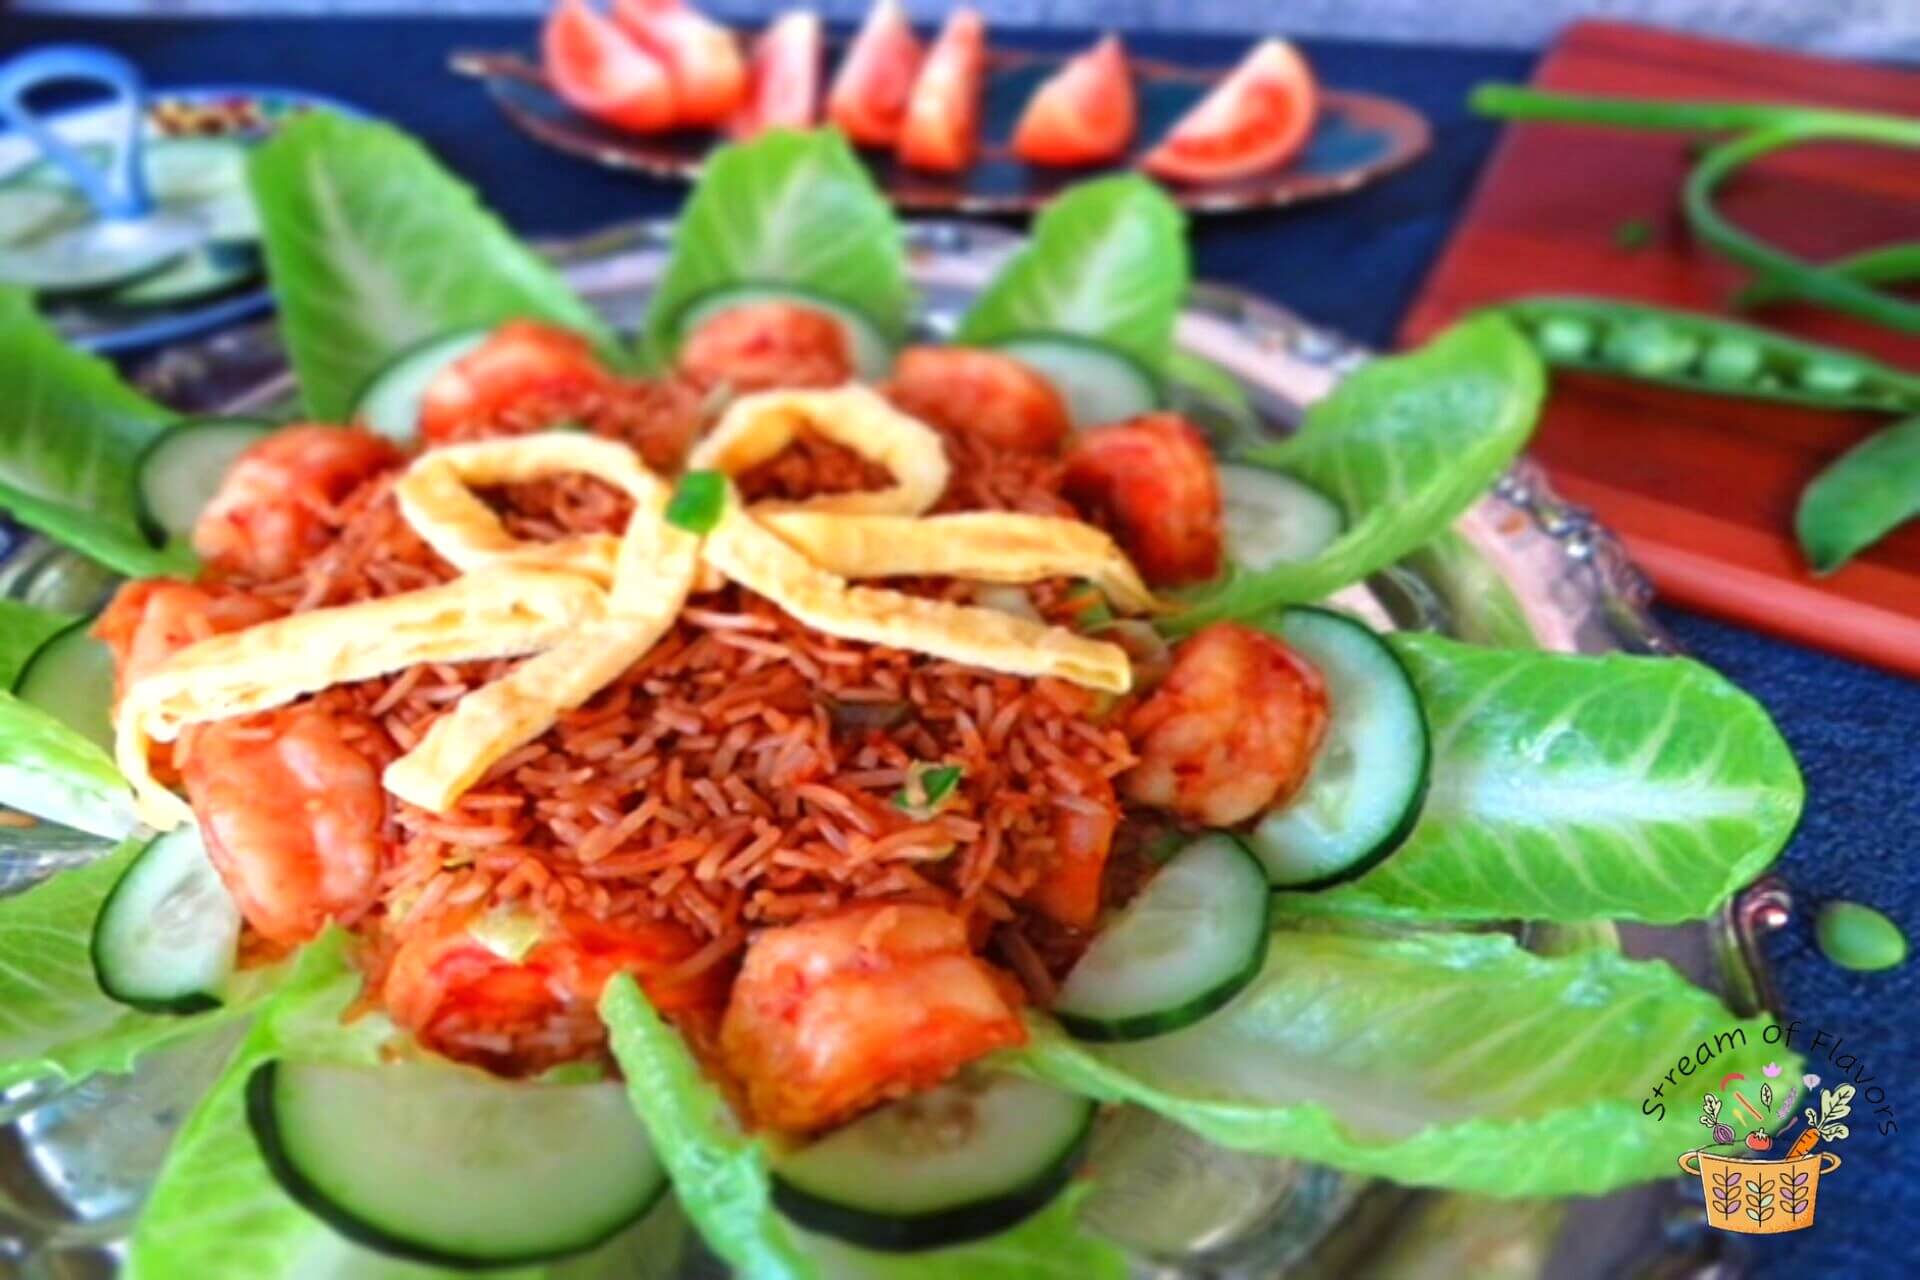 prawn nasi goreng with lettuce and cucumber slices